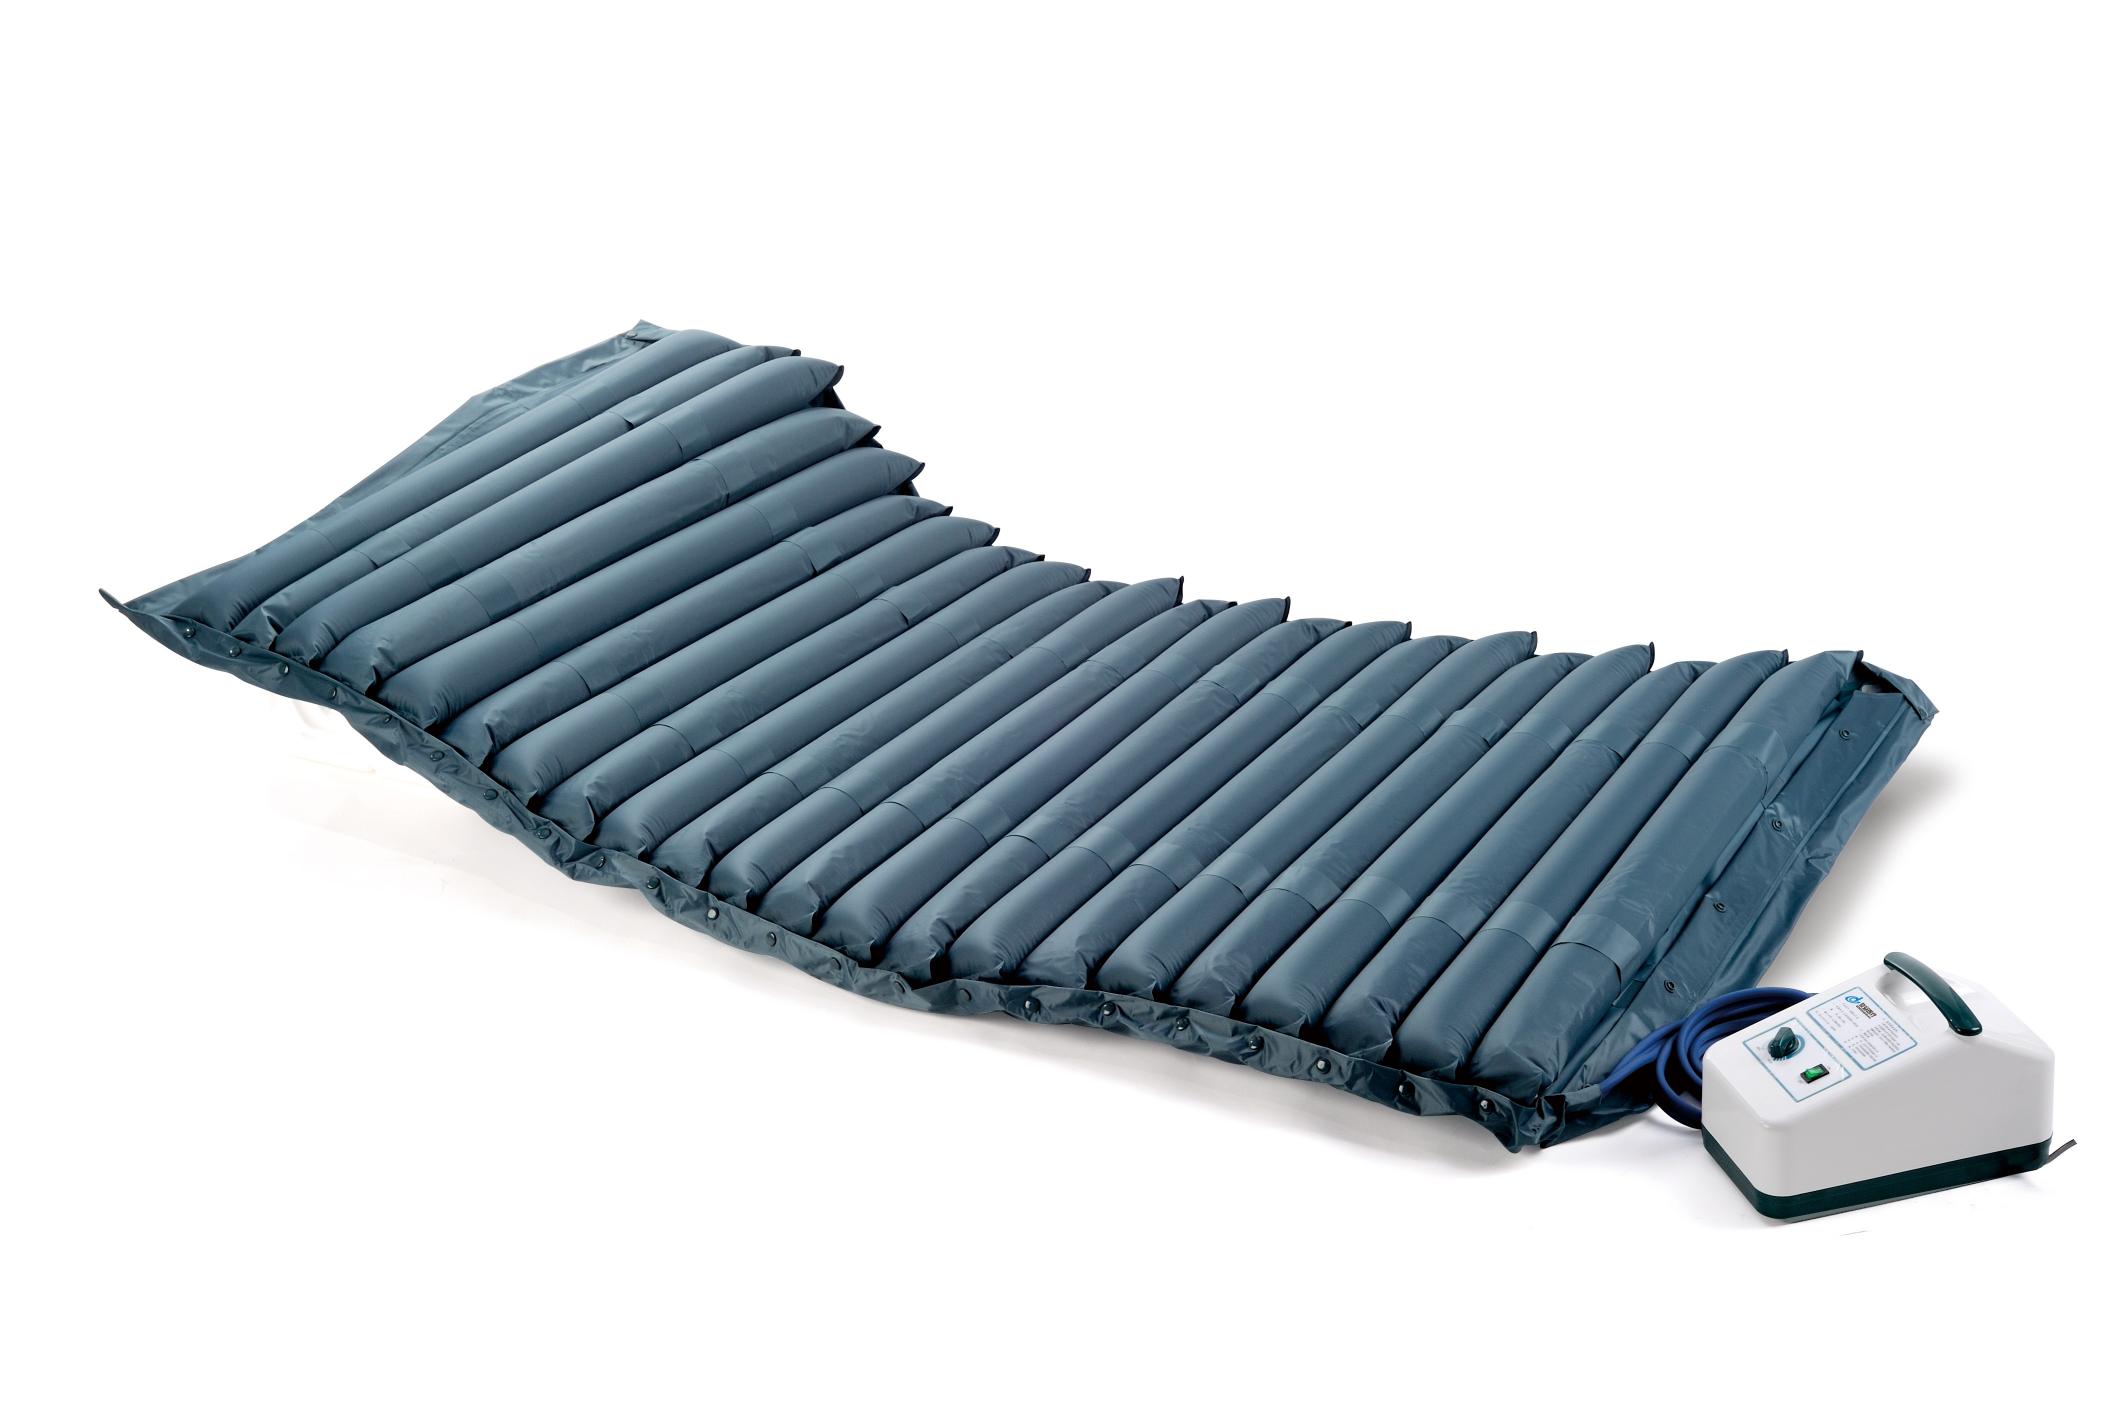  anti decubitus mattress china